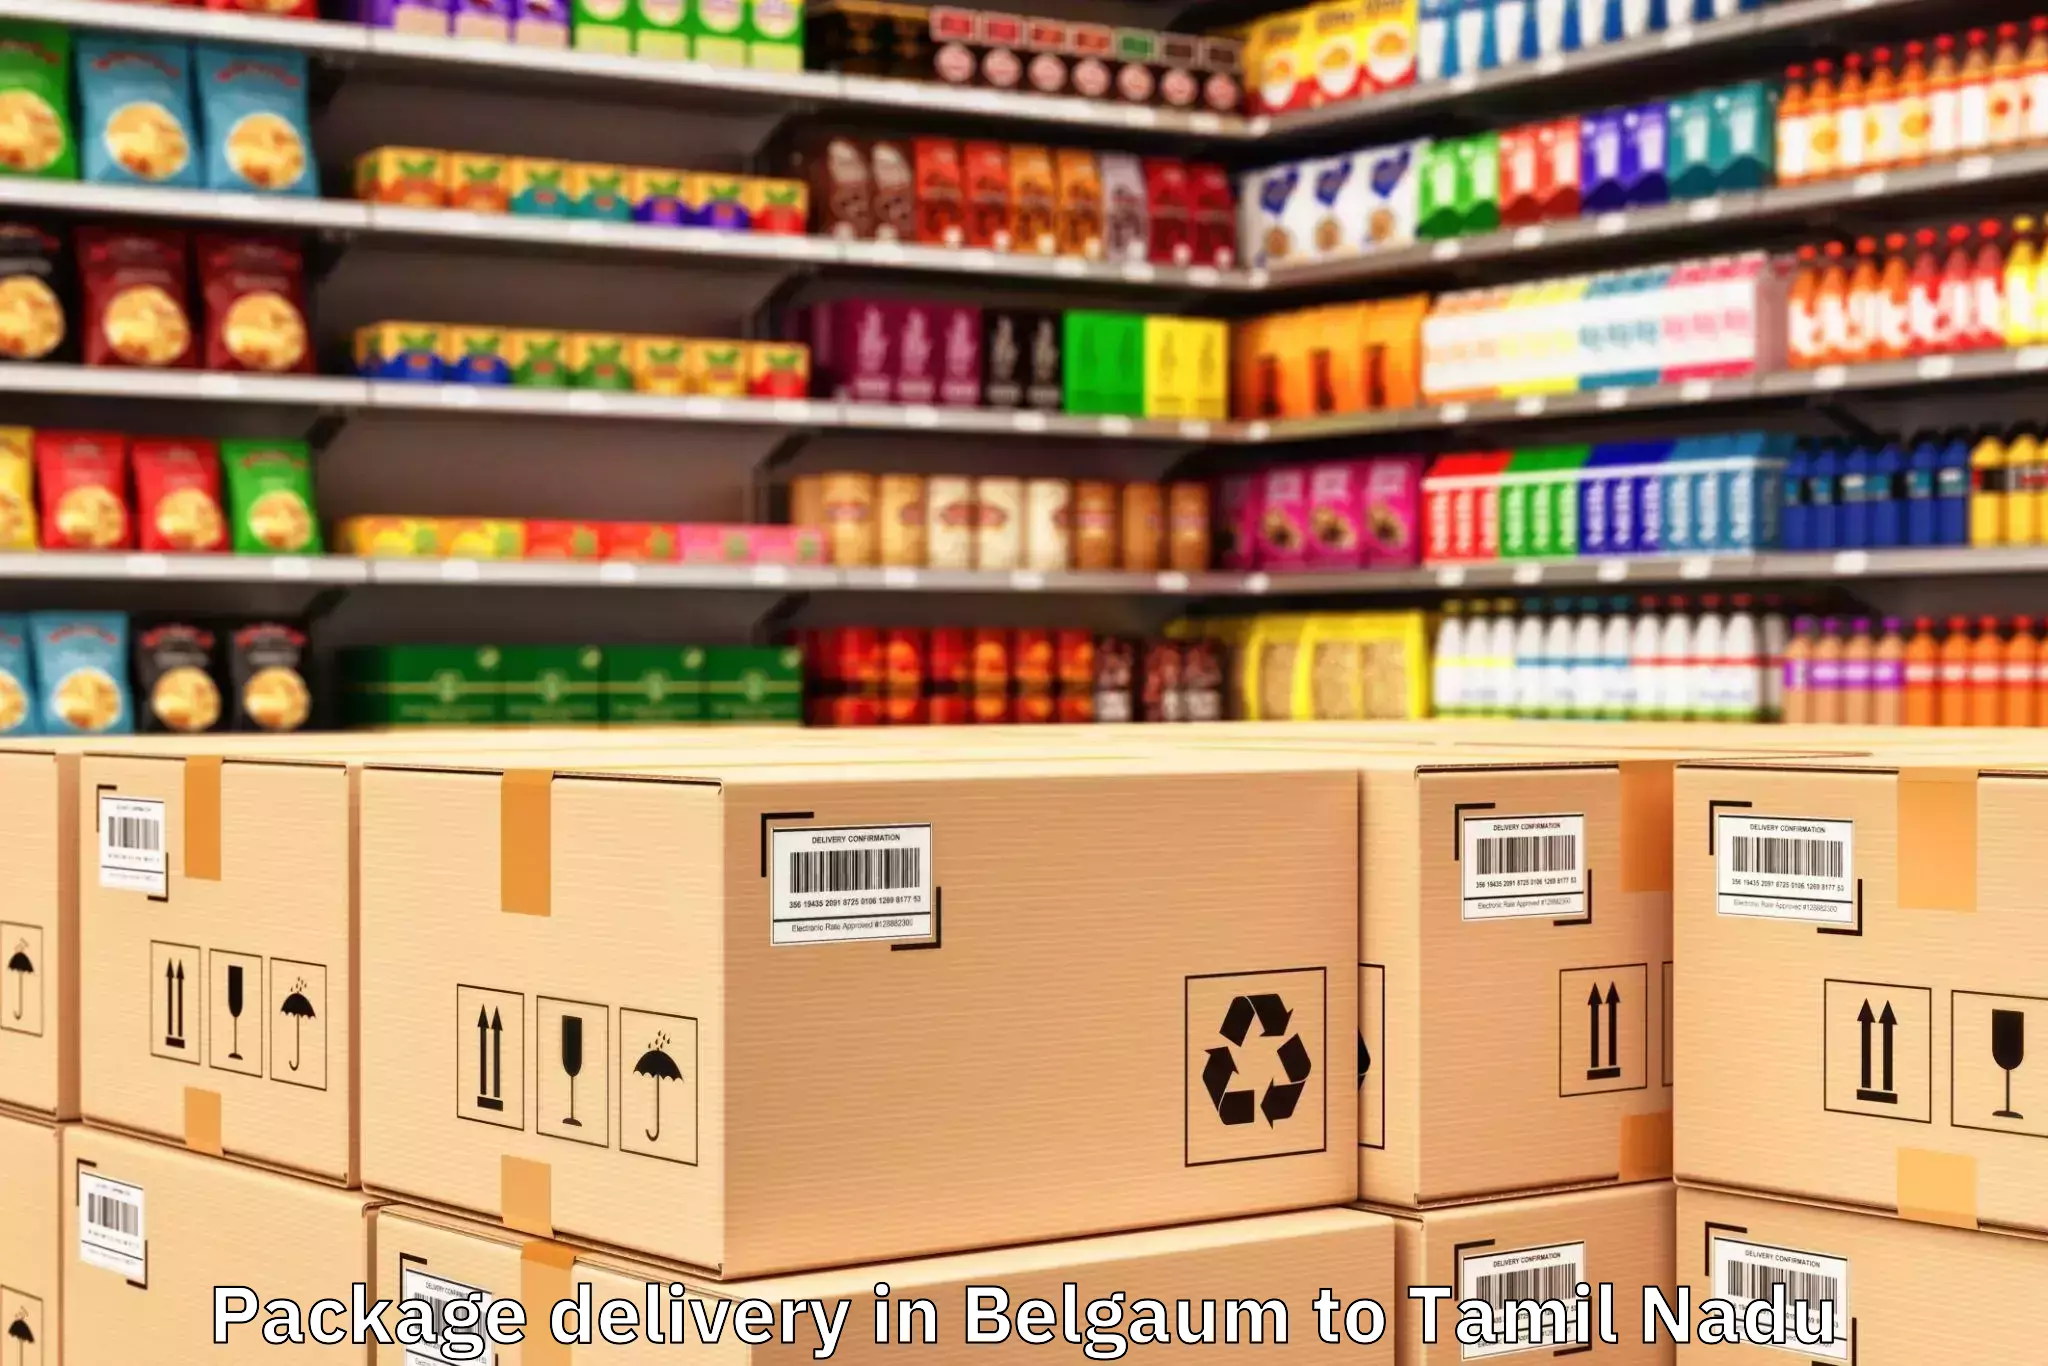 Belgaum to Ambattur Industrial Estate Package Delivery